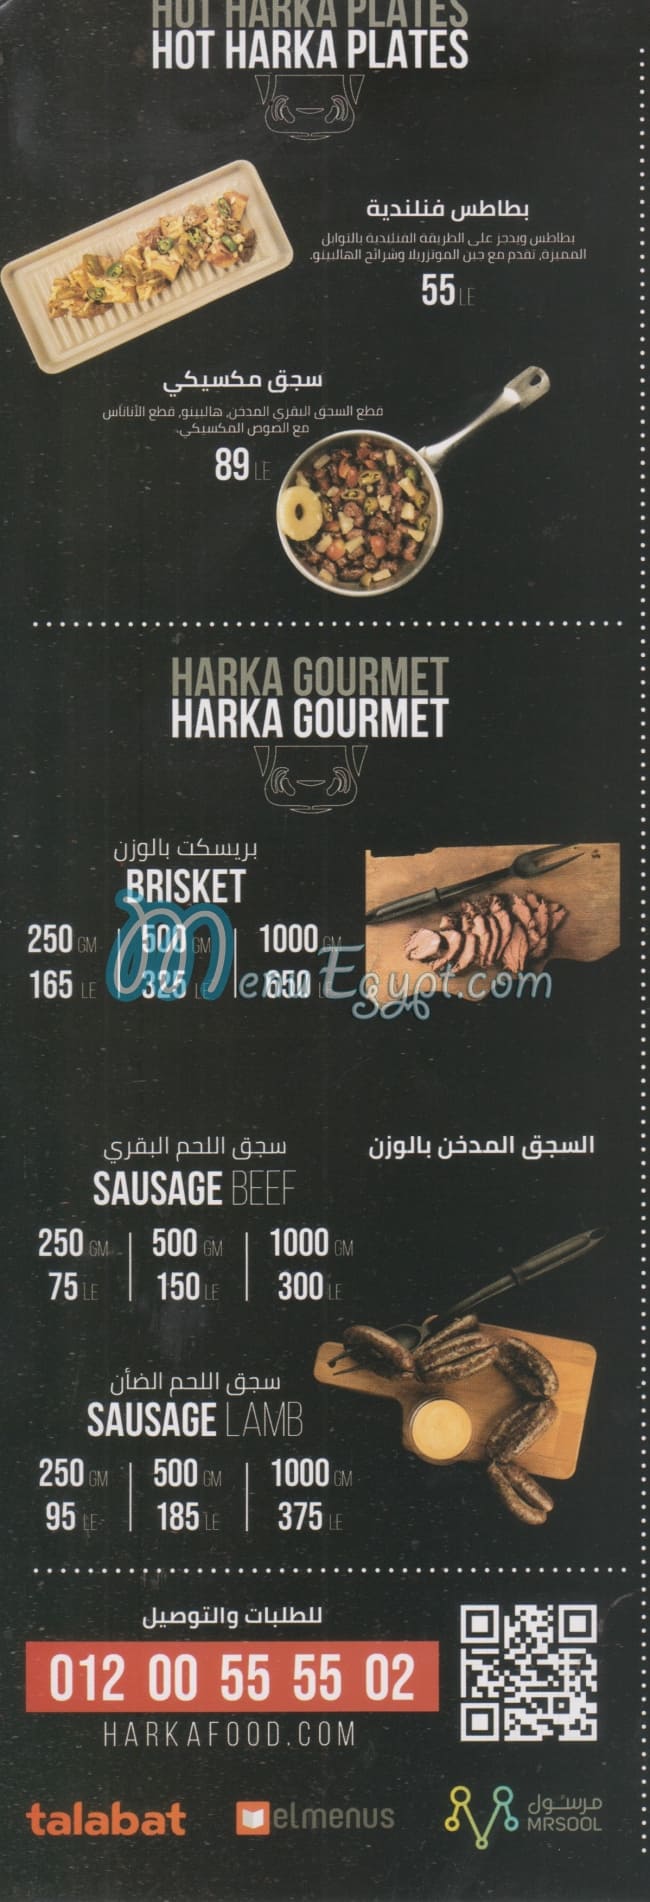 Haraka Food menu